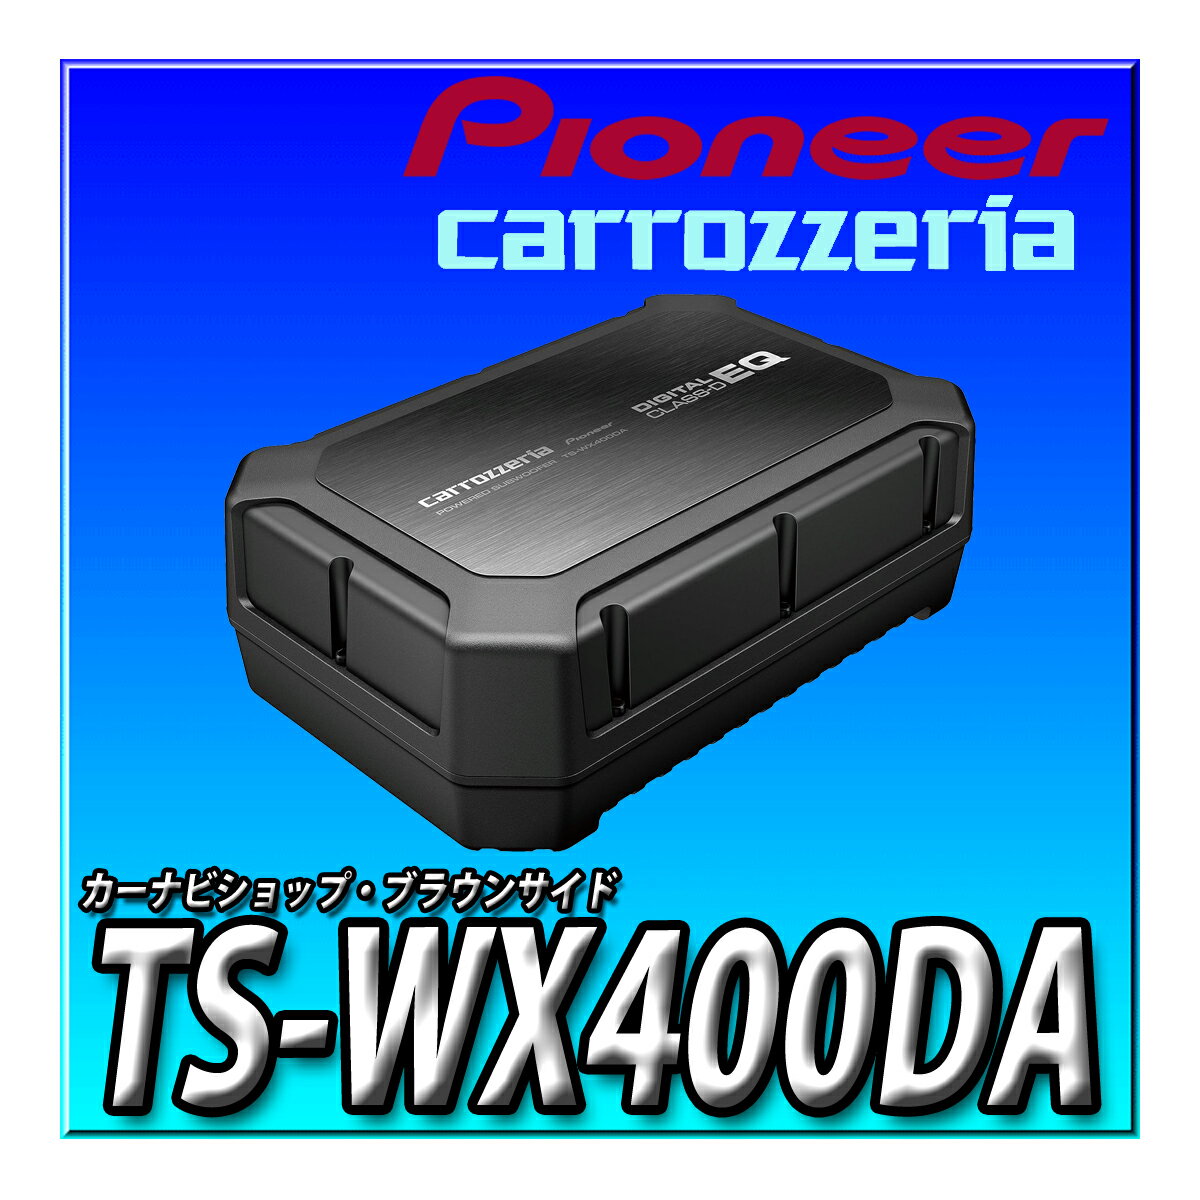 TS-WX400DA Pioneer パイオニア スピーカー サブウーファー 24cm×14cm パワードサブウーファー カロッツェリア